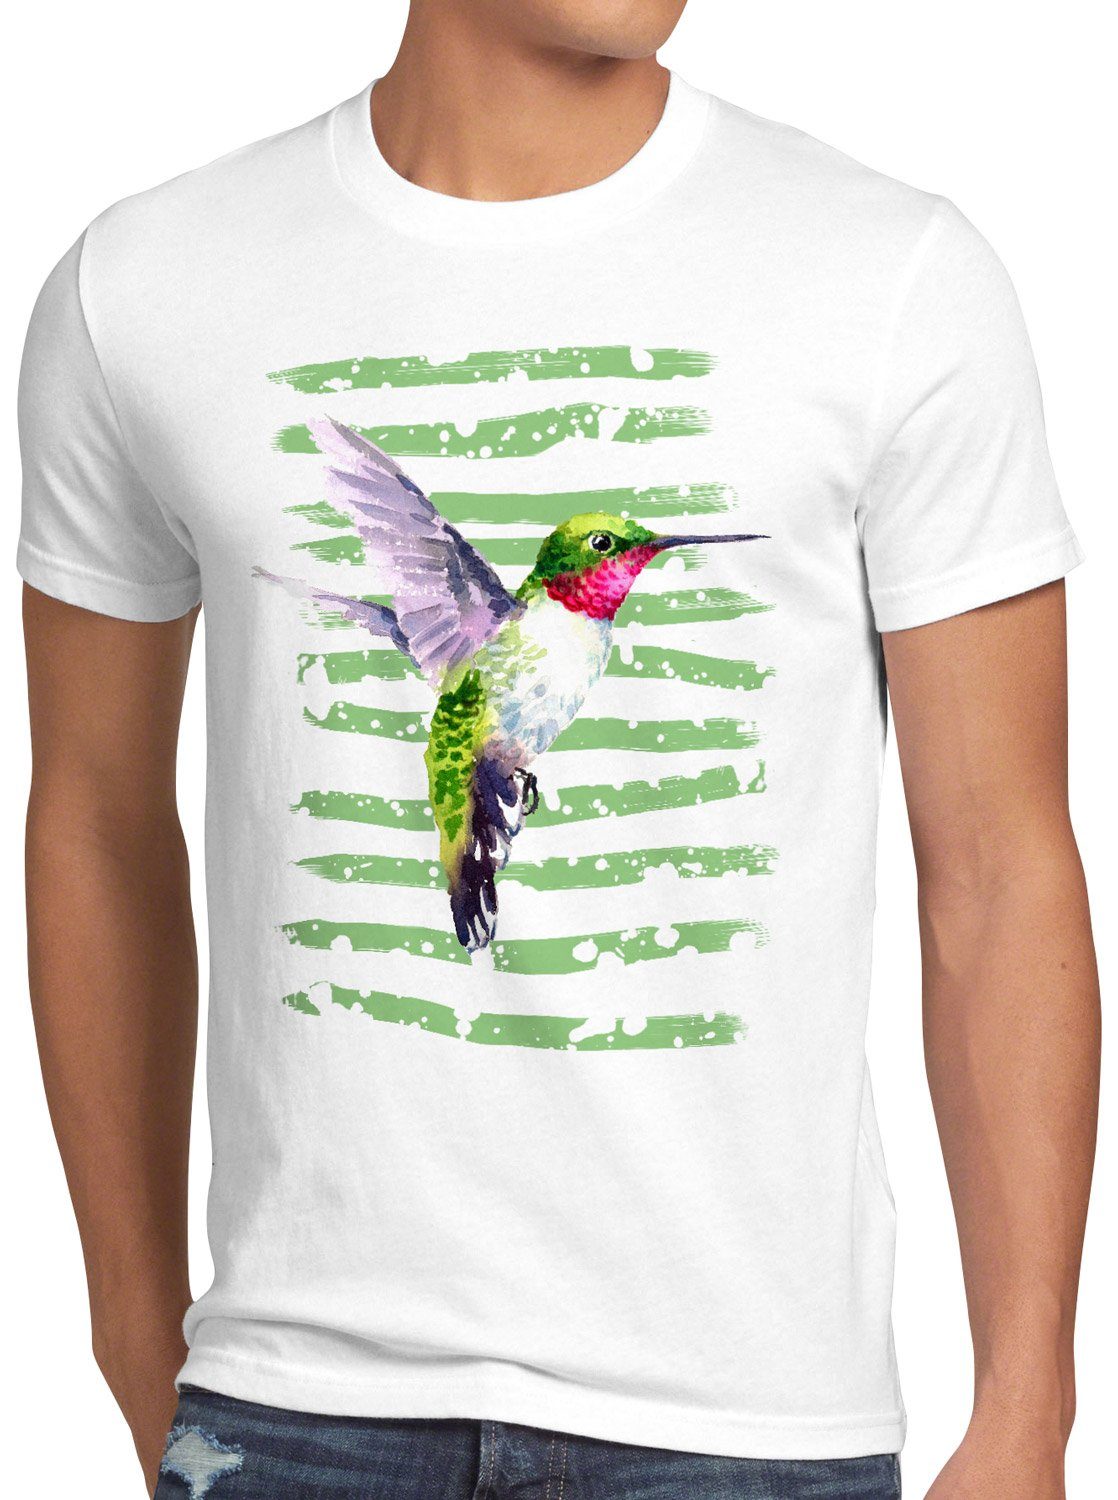 Print-Shirt Kolibri T-Shirt Herren sommer dschungel style3 regenwald